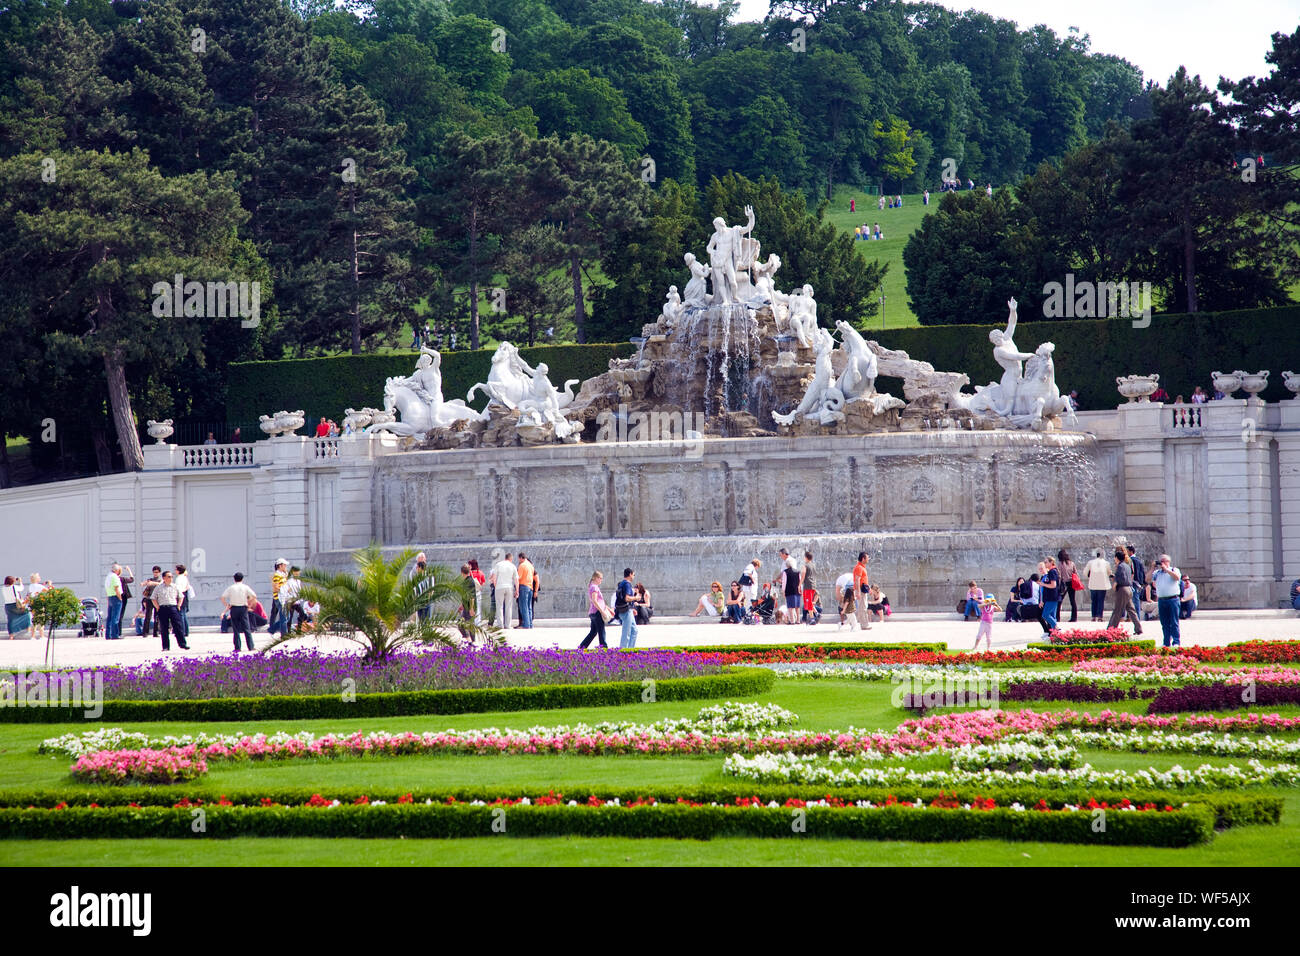 The gardens and attractions of Schloss Schonbrunn. Vienna Austria Stock Photo